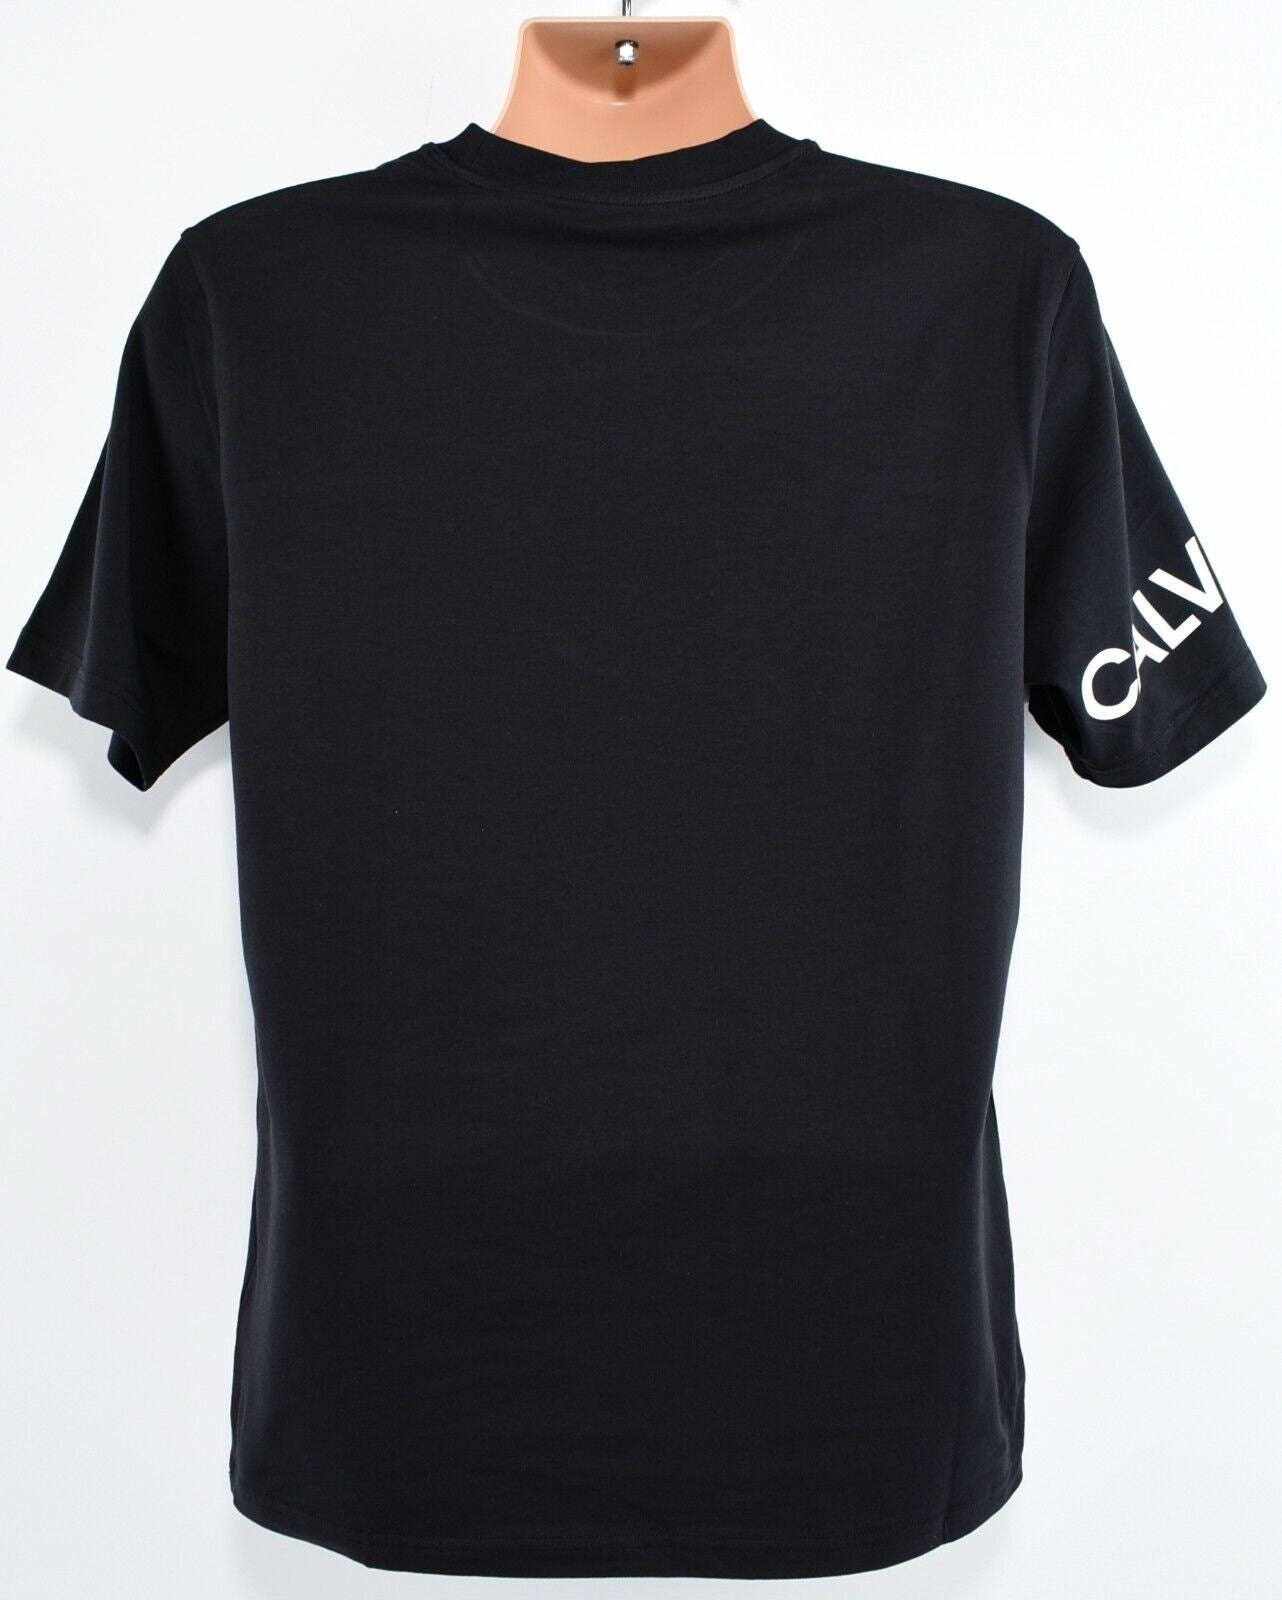 CALVIN KLEIN Performance: Men's Crew Neck Cotton T-shirt, Black, size M